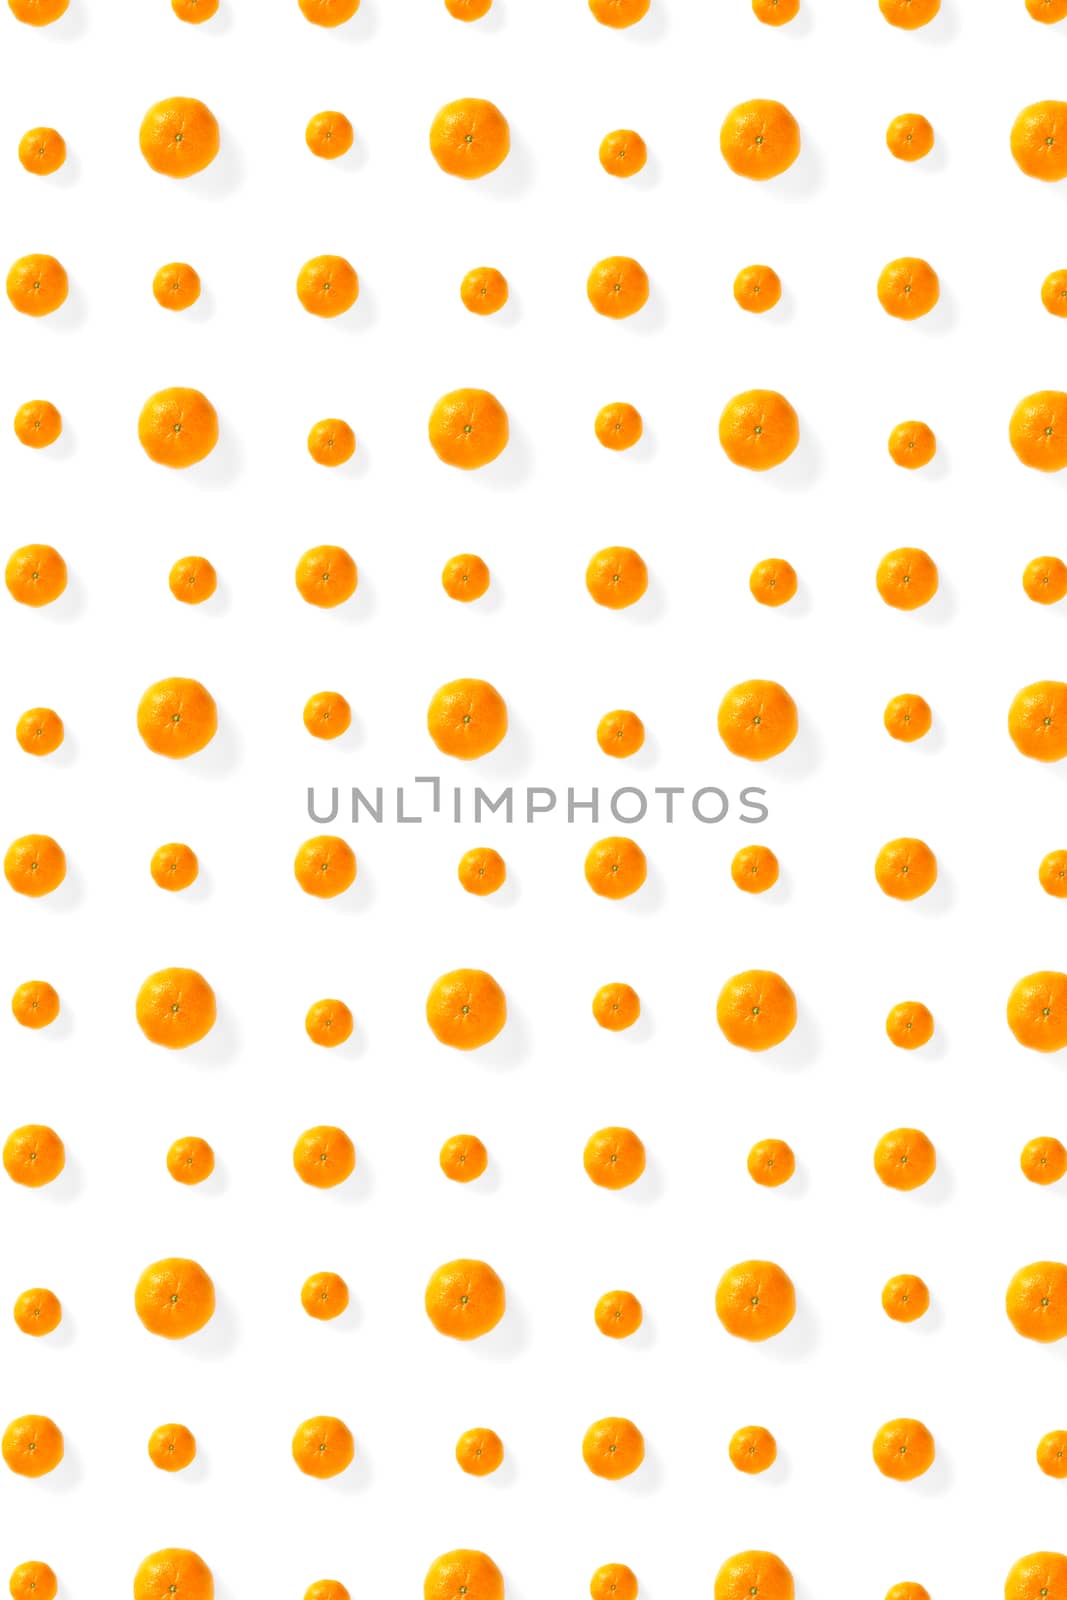 Isolated tangerine citrus collection background. Whole tangerines or mandarin orange fruits isolated on white background not pattern